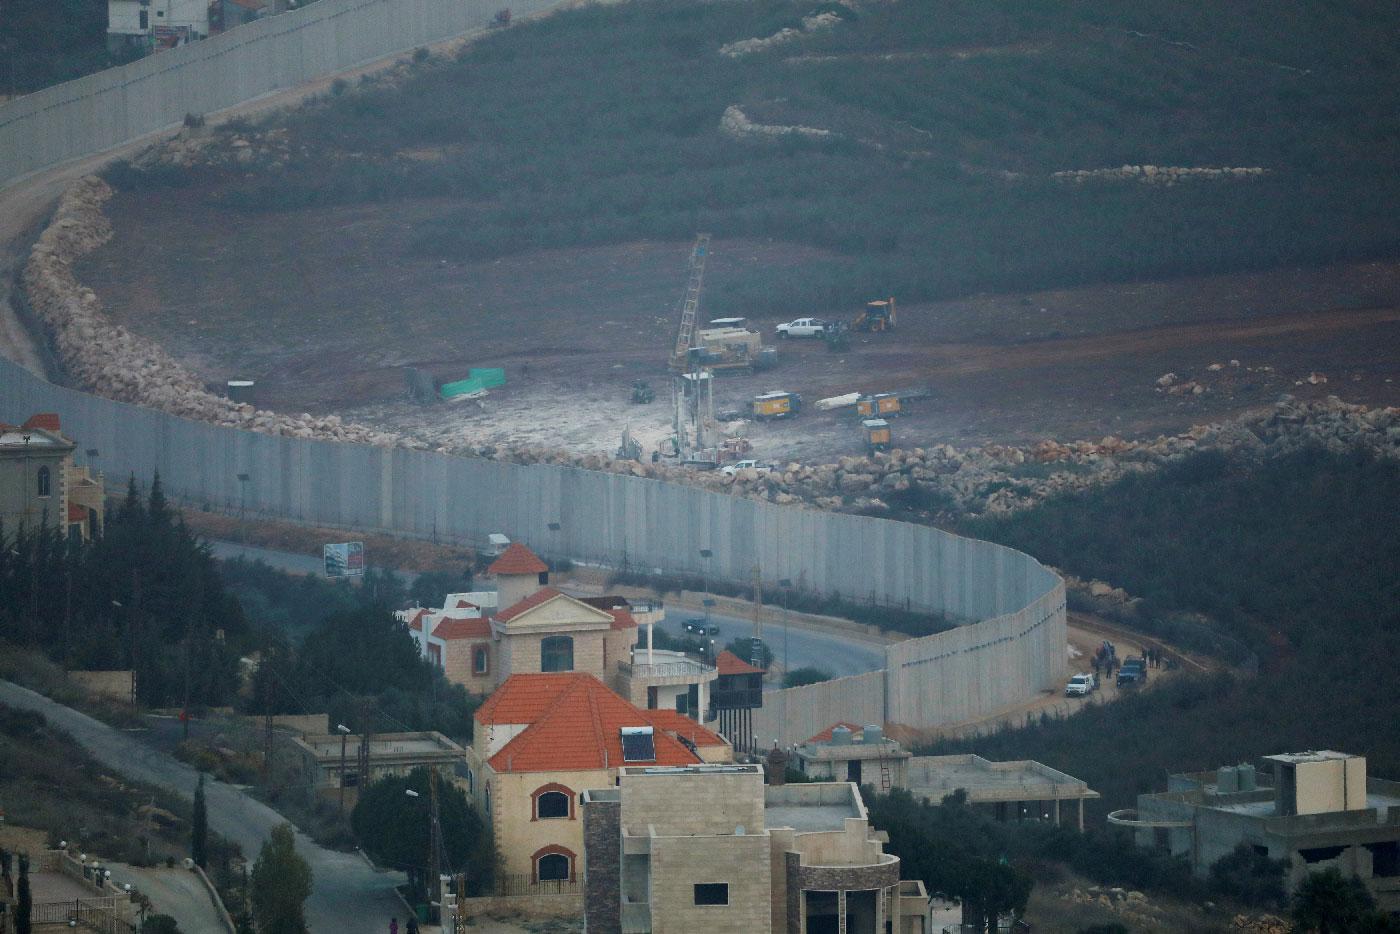  Israeli drilling equipment is seen next to the border with Lebanon, near the Lebanese village of Kfar Kila, seen from the Israel's side December 4, 2018.